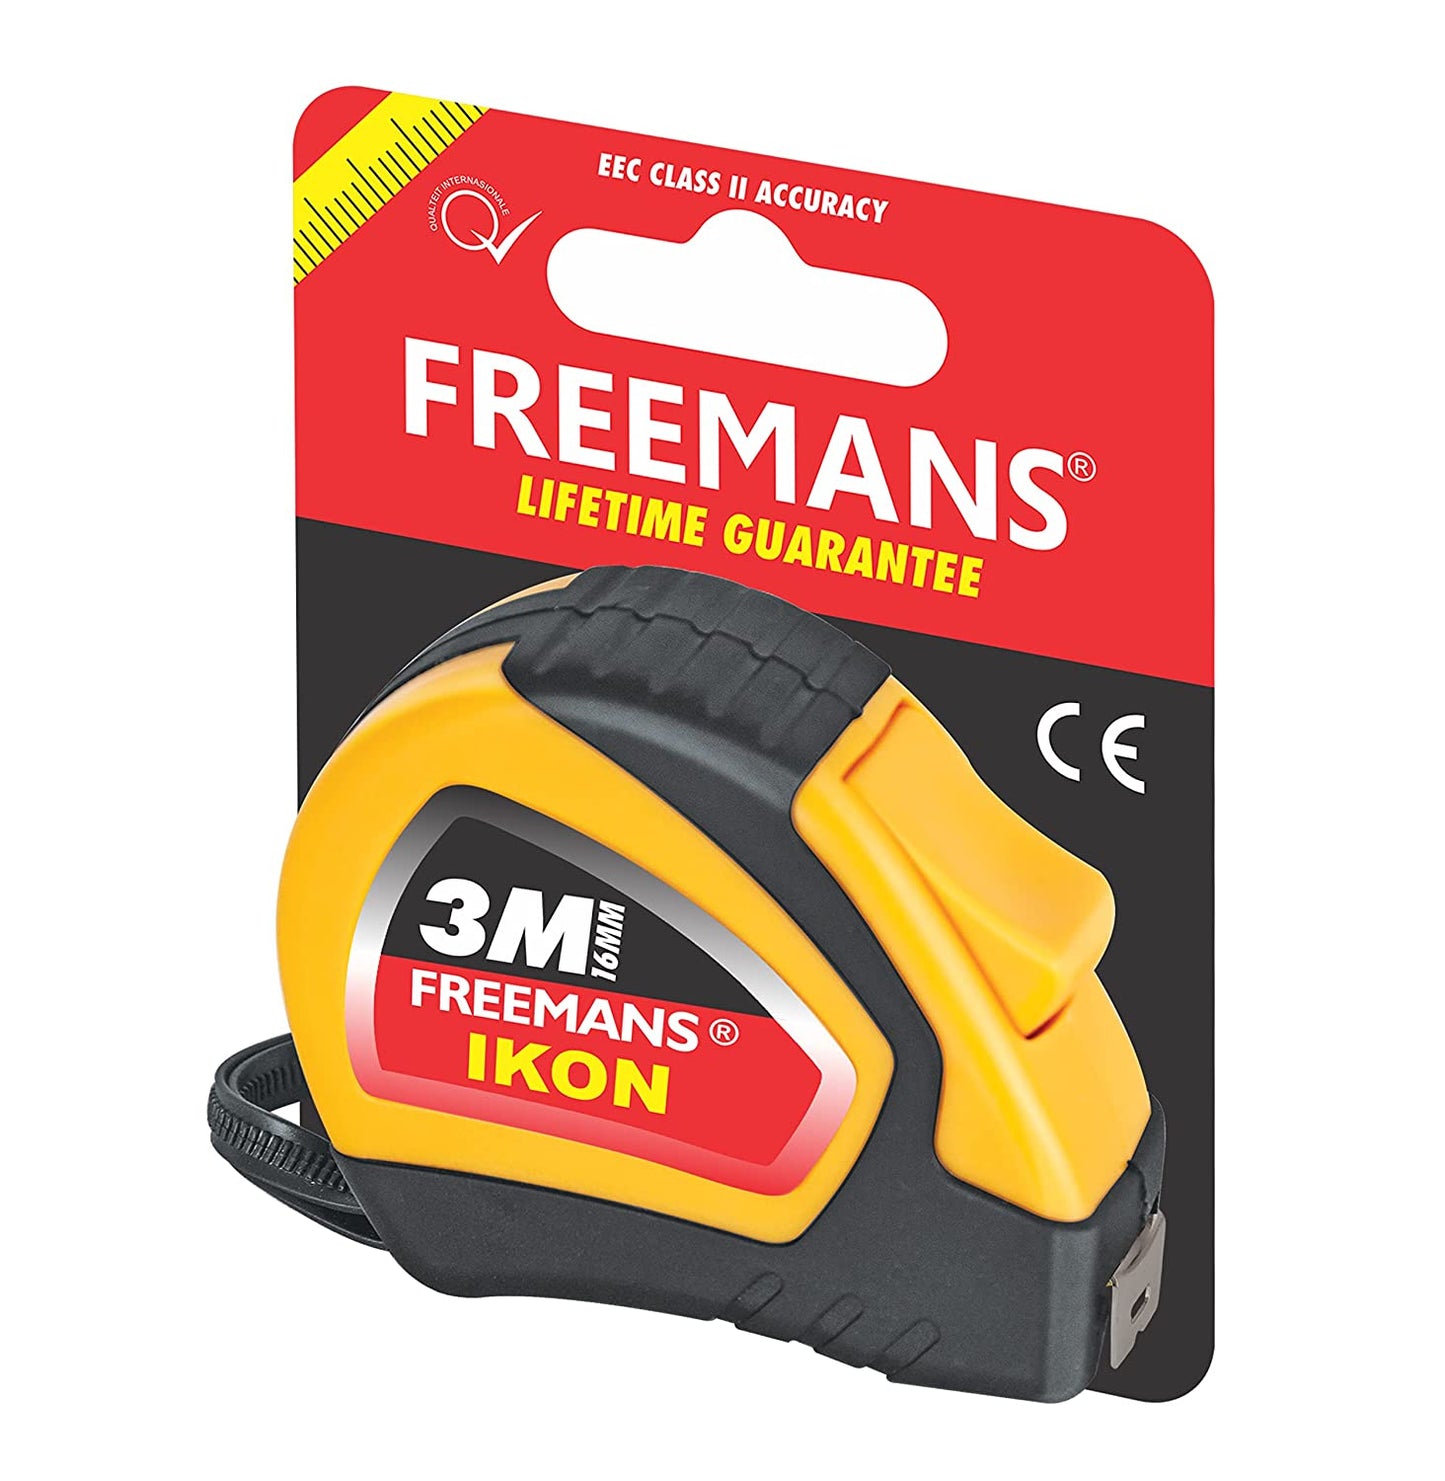 Freemans Ikon 3m:16mm Steel Measuring Tape